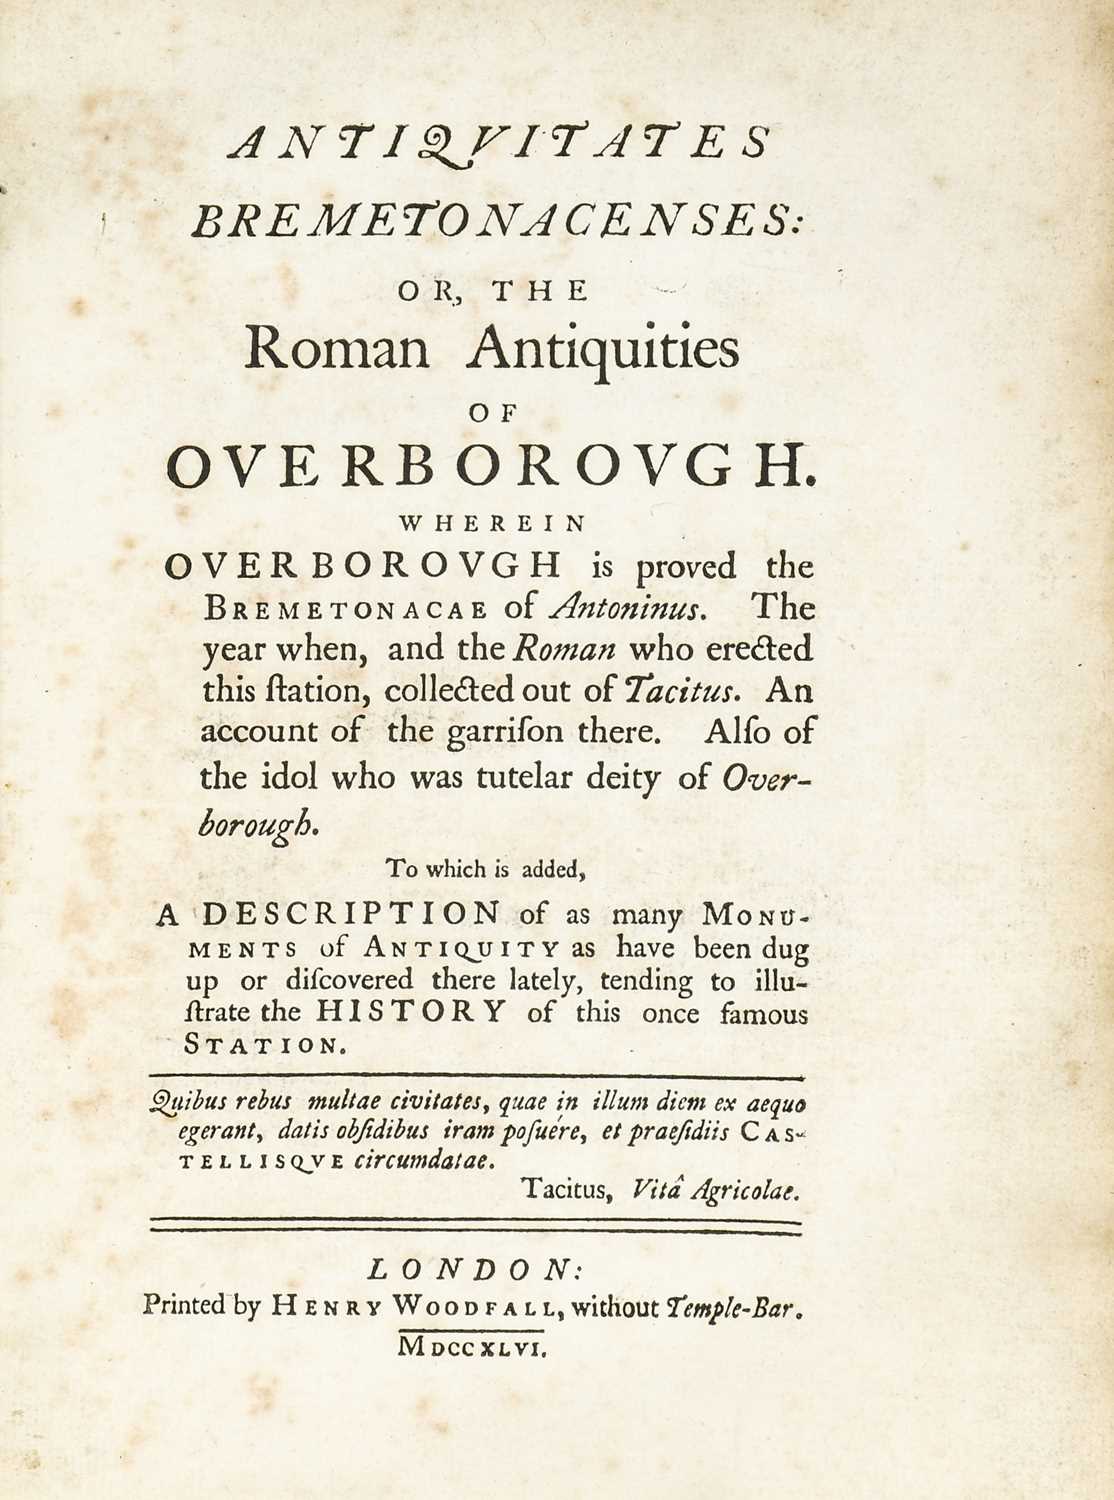 Lot 31 - Rauthmell (Richard). Antiquitates Bremetonacenses, 1st edition, 1746, & others